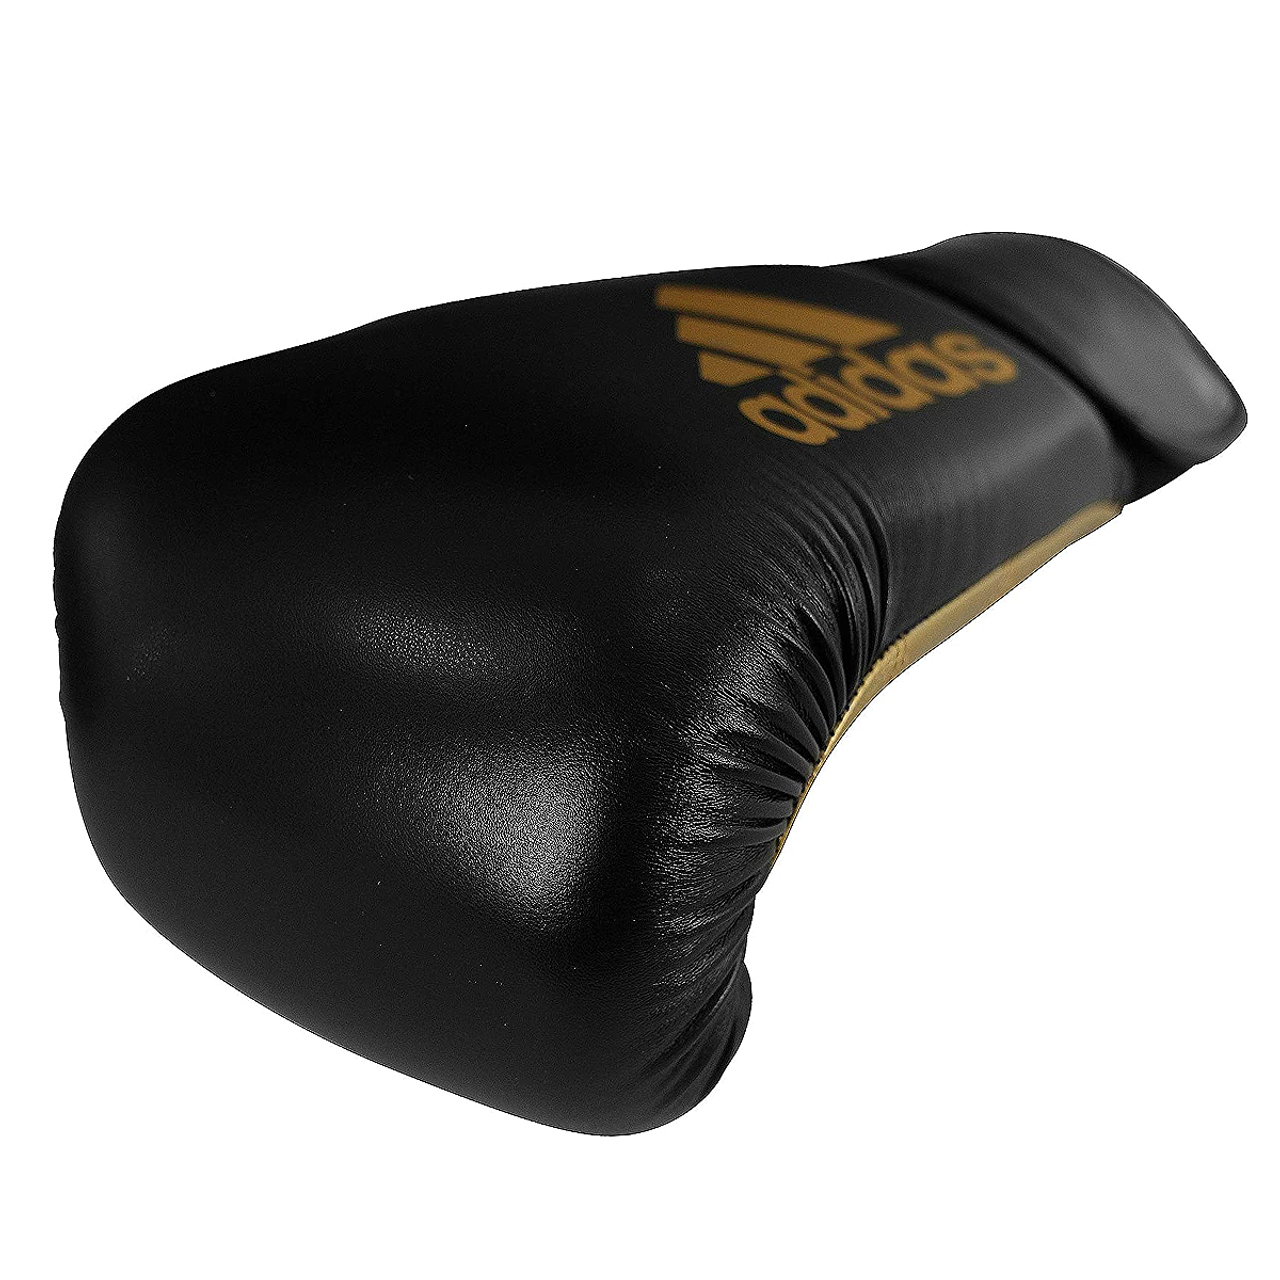 climax Niet ingewikkeld Of later Adidas Hybrid 50 Boxing Gloves - Black, Gold